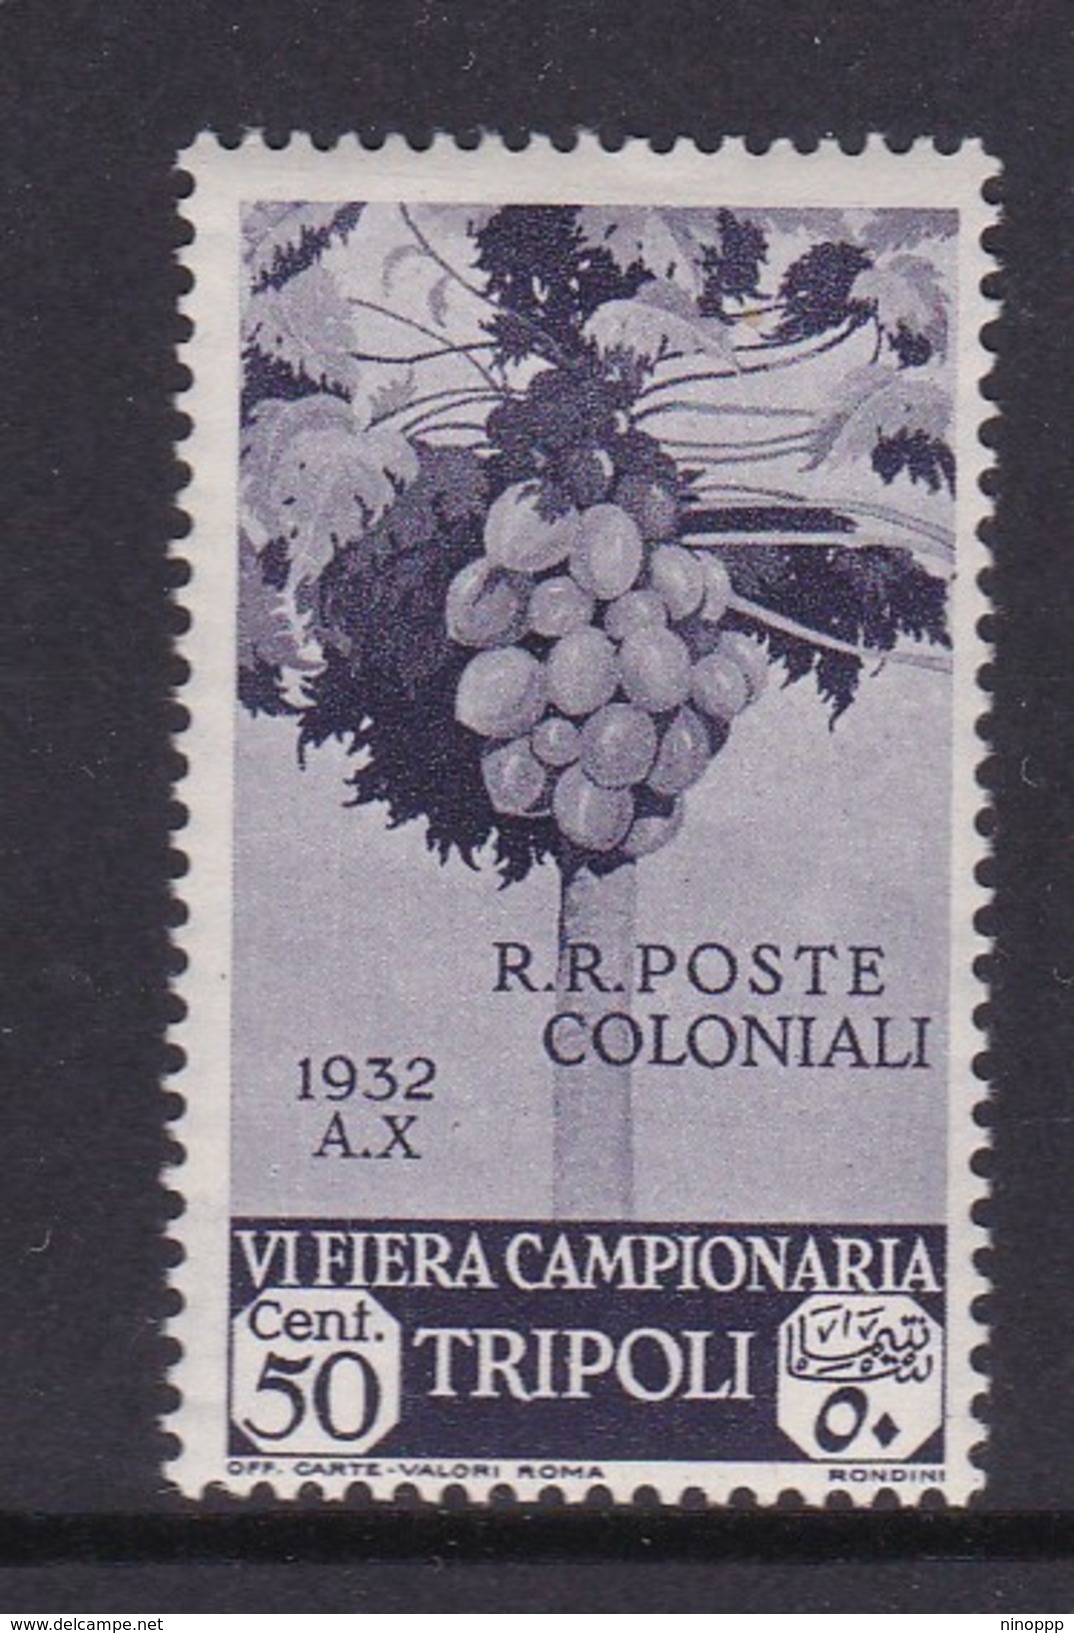 Italy-Colonies And Territories-Libya S 112 1932 Sixth Sample Fair,Tripoli ,50c Violet,papaya Tree,mint Hinged - Libya